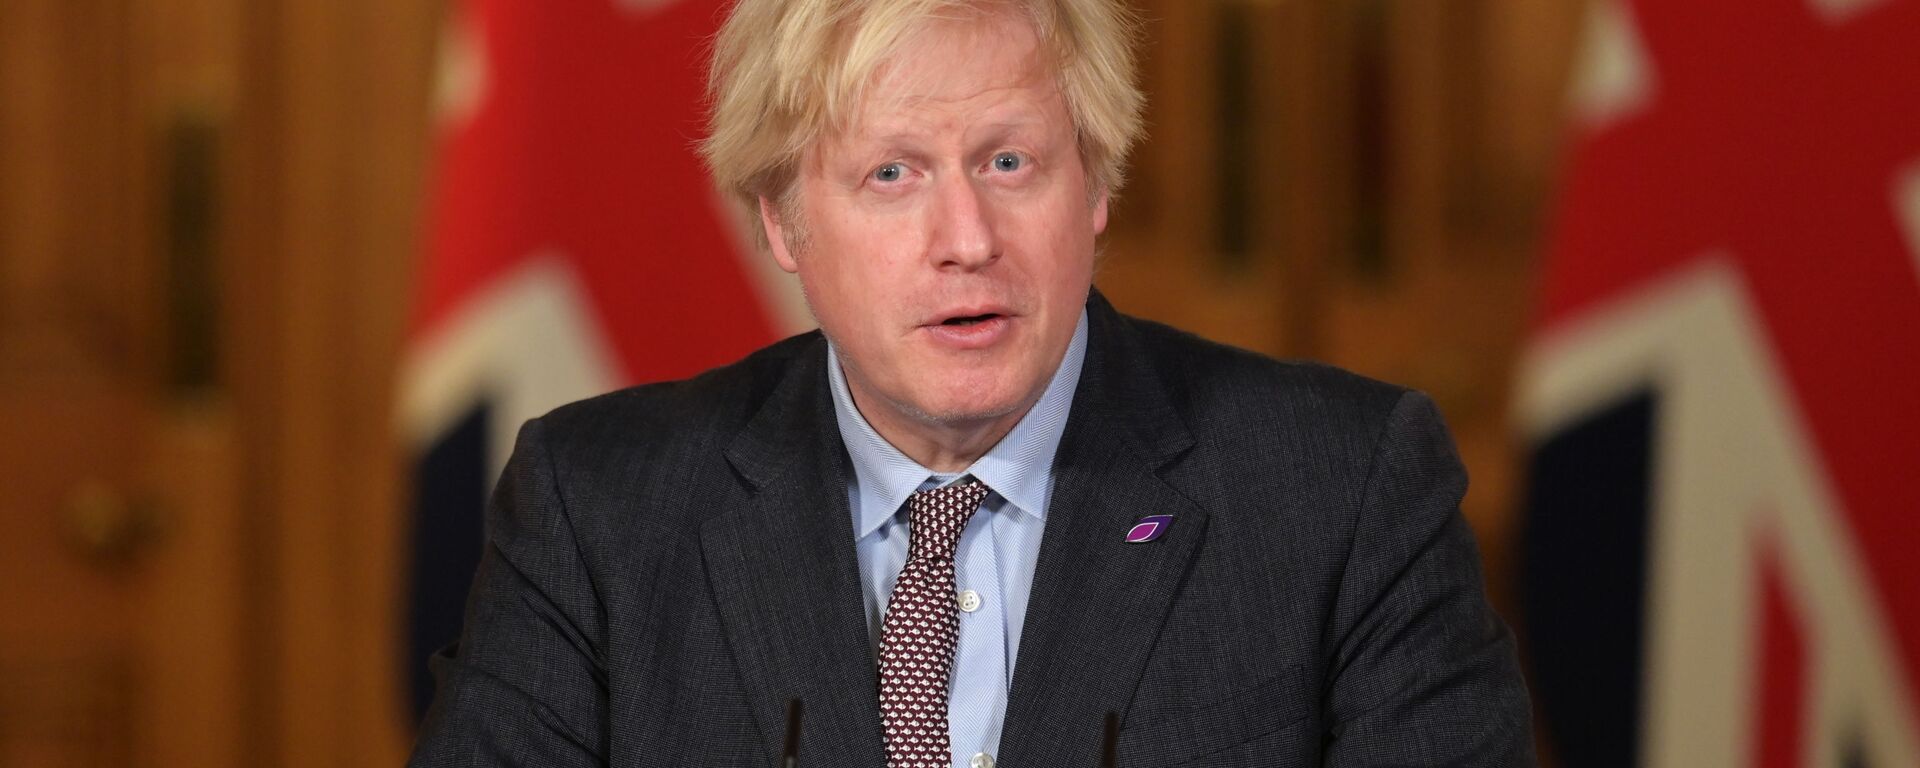 Boris Johnson, primer ministro del Reino Unido  - Sputnik Mundo, 1920, 26.05.2021